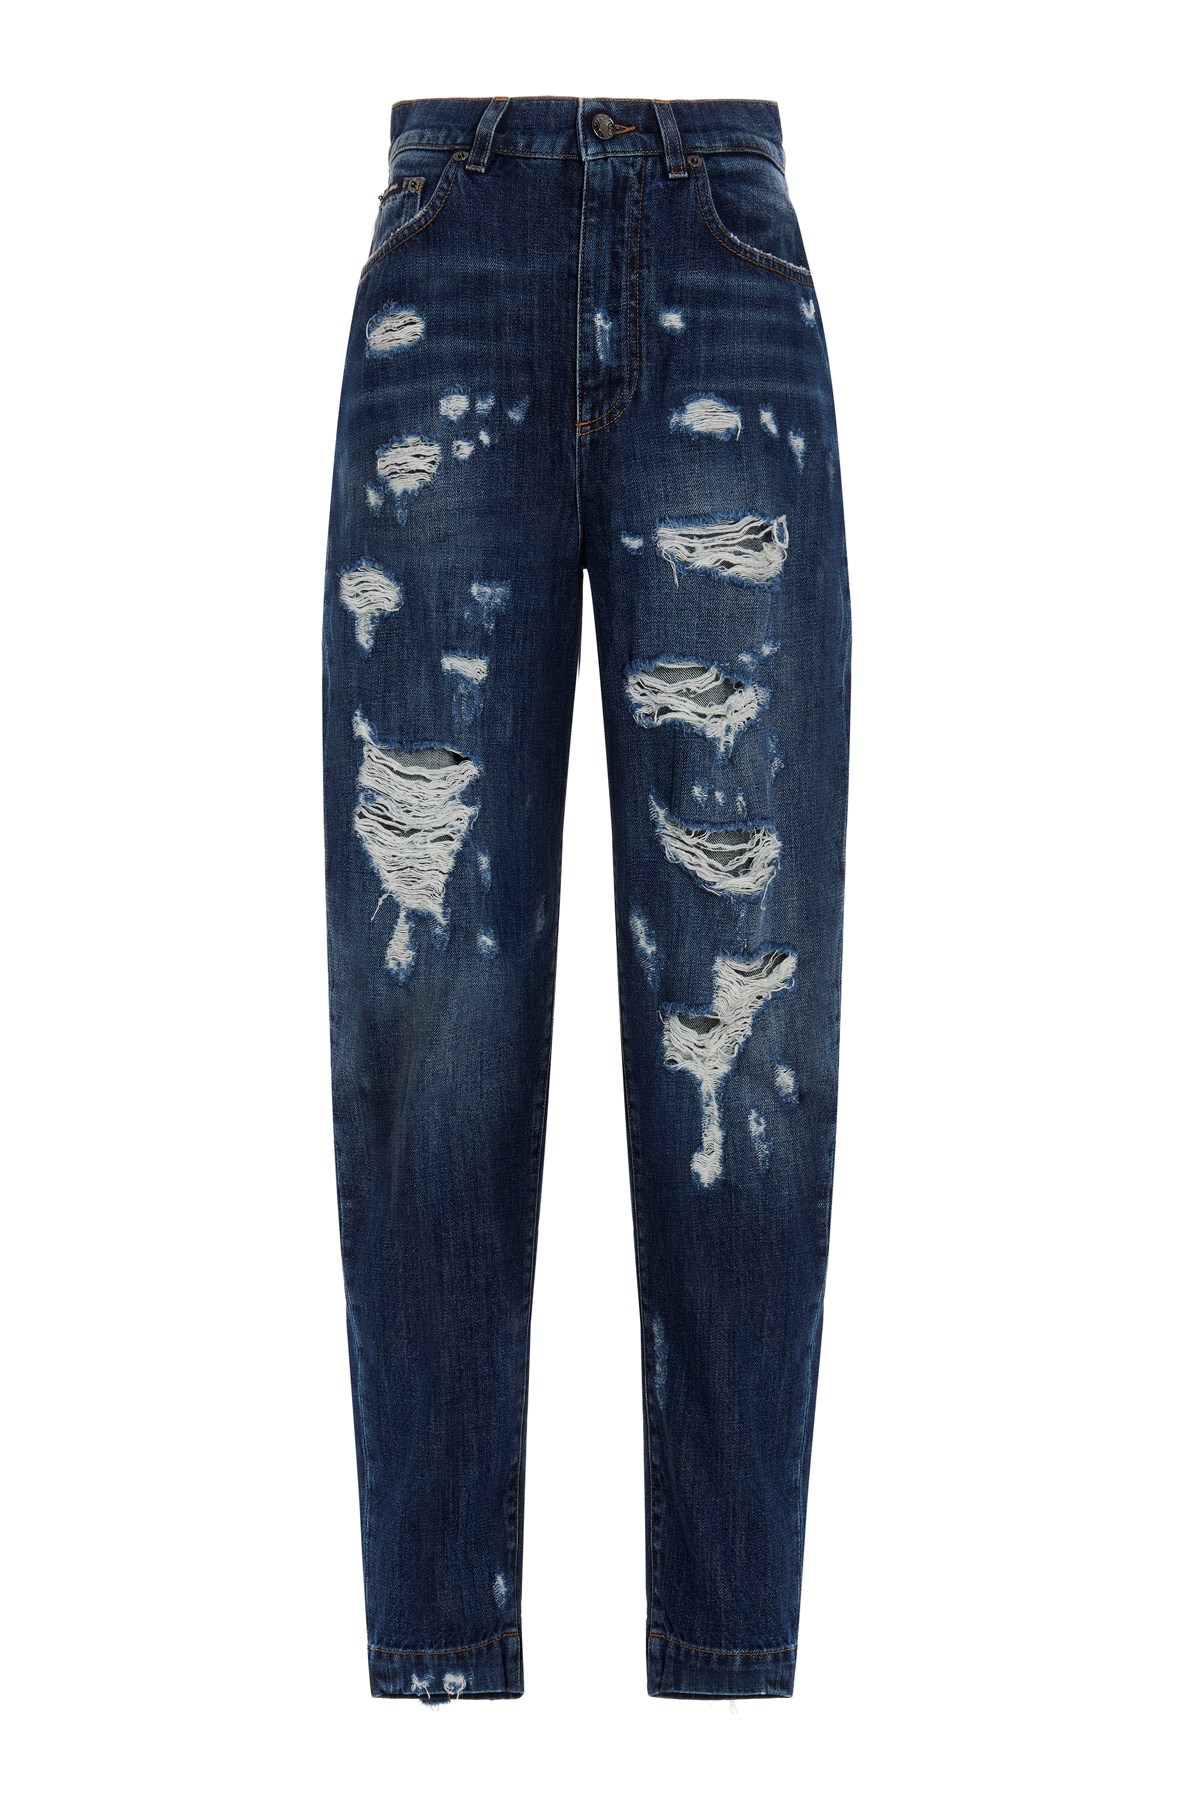 DOLCE & GABBANA 'Dg Pop’ Jeans